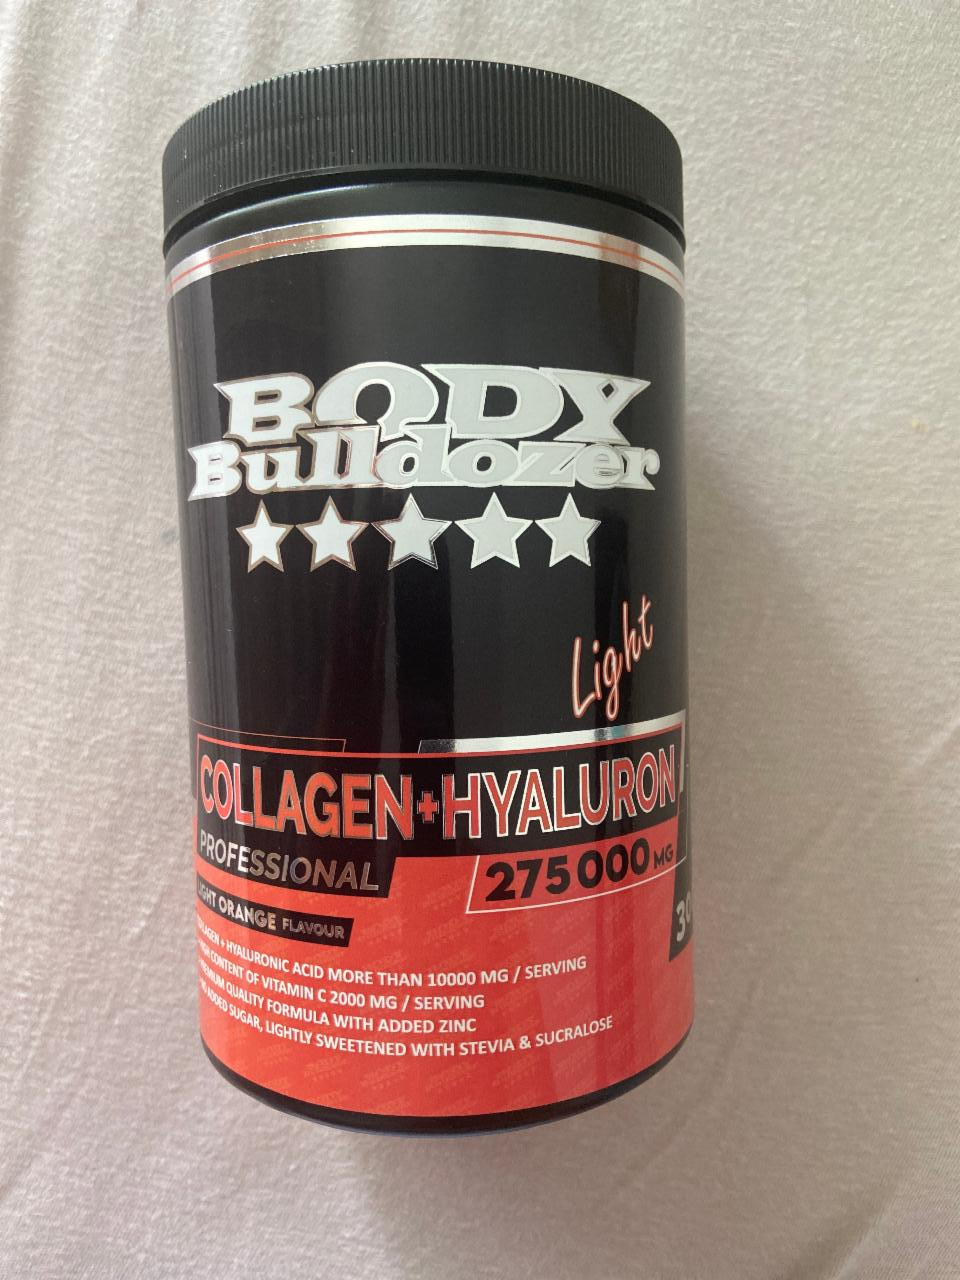 Fotografie - Collagen+Hyaluron Body Bulldozer